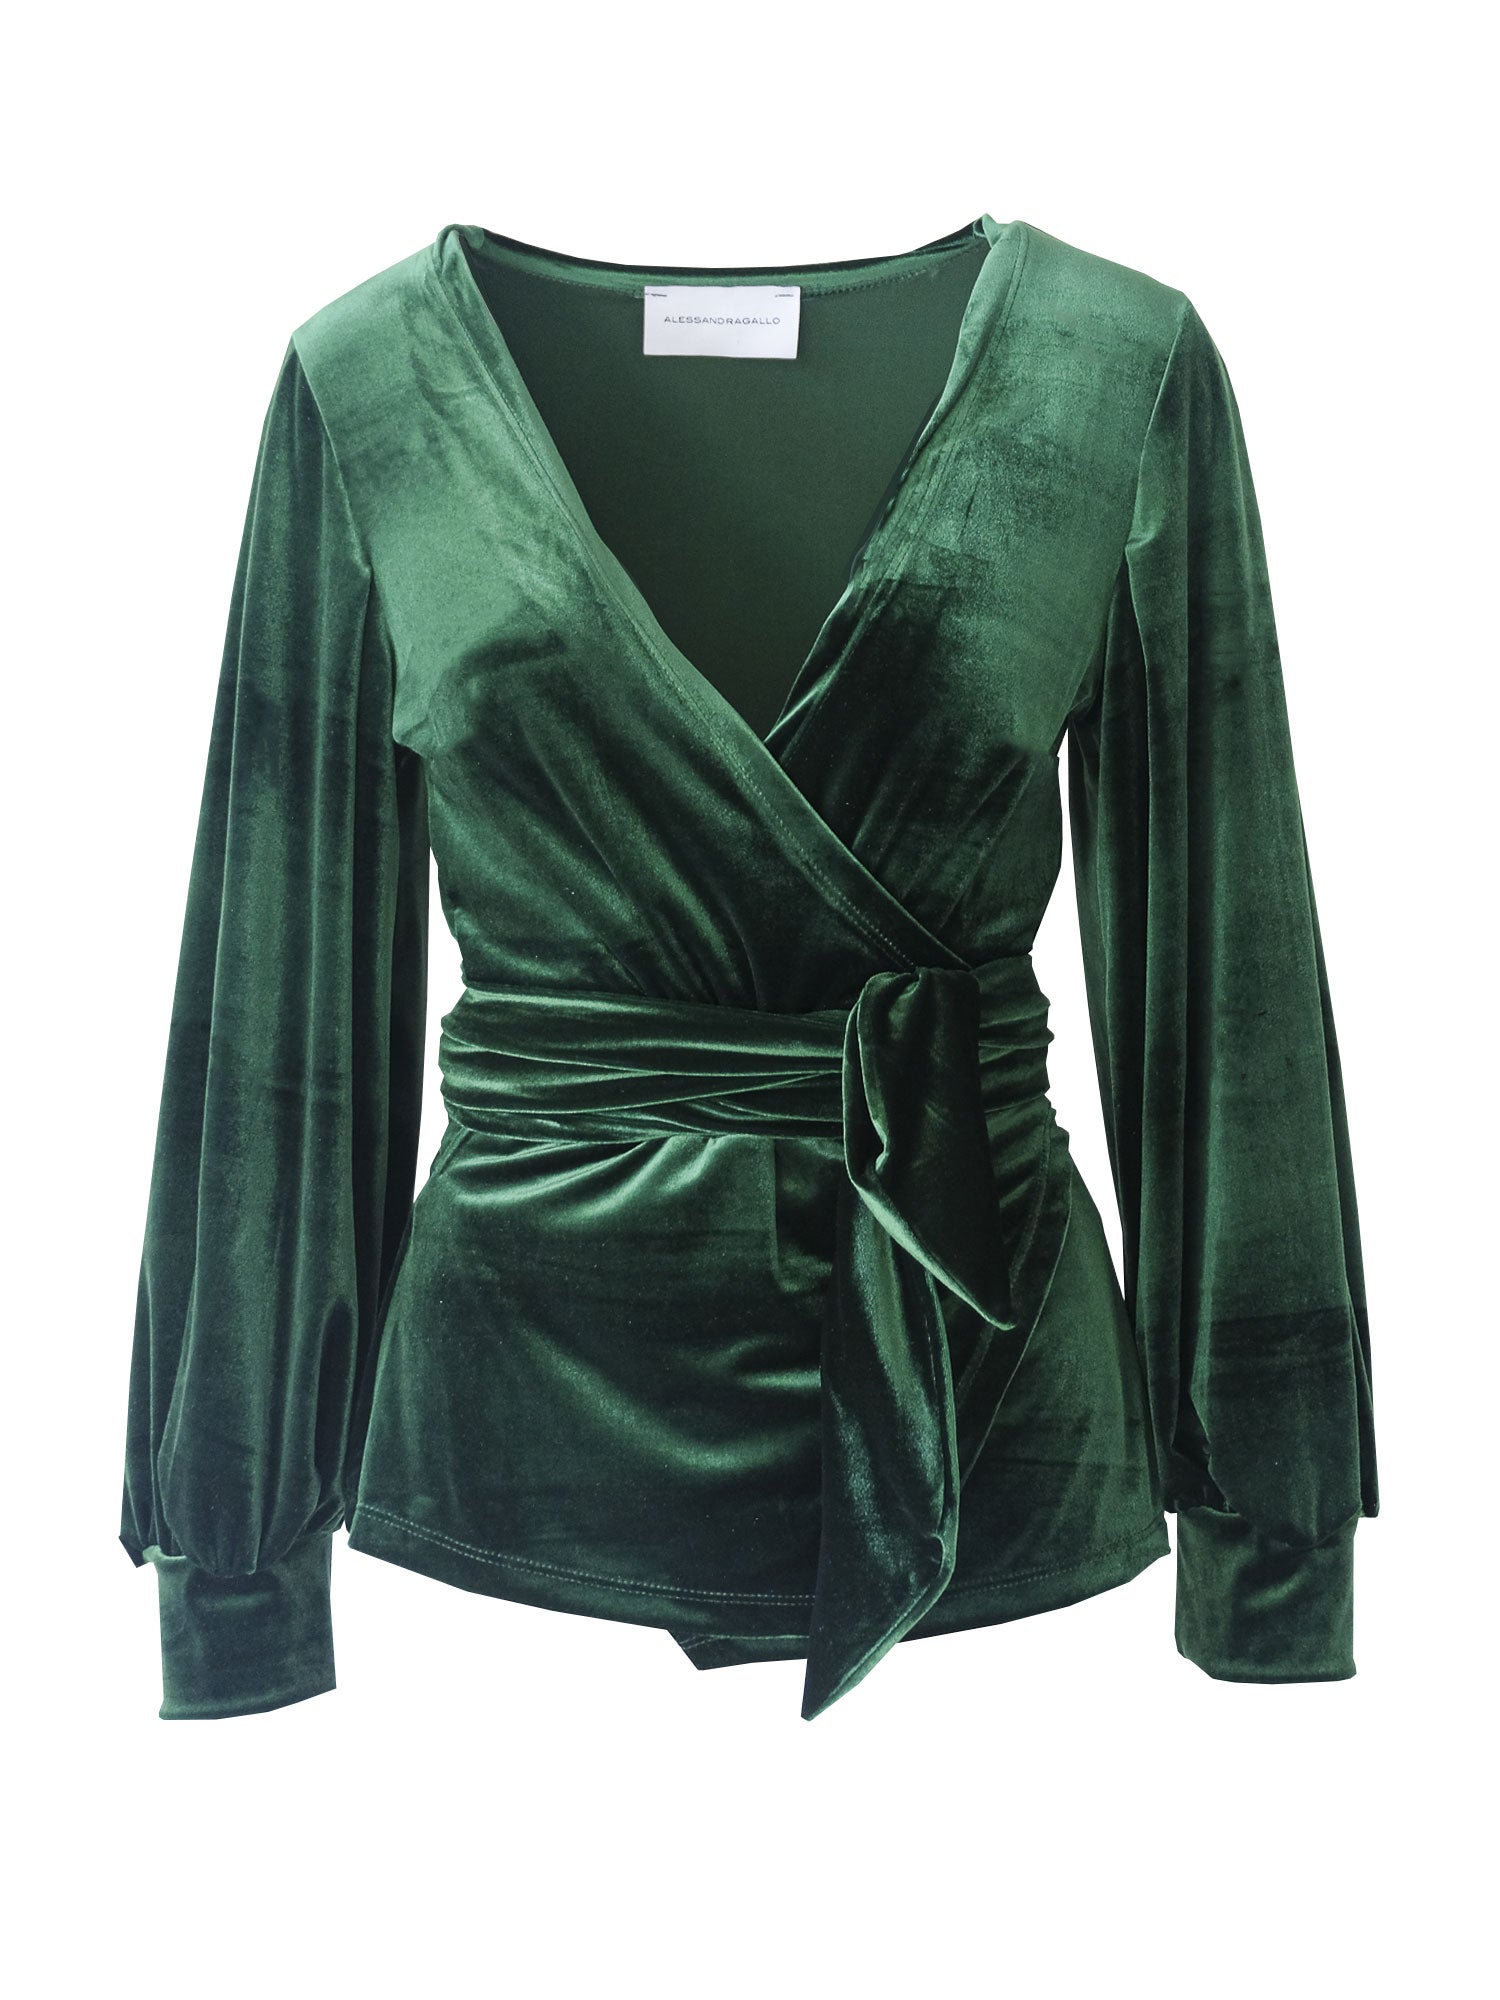 CLOE - emerald green chenille kimono shirt